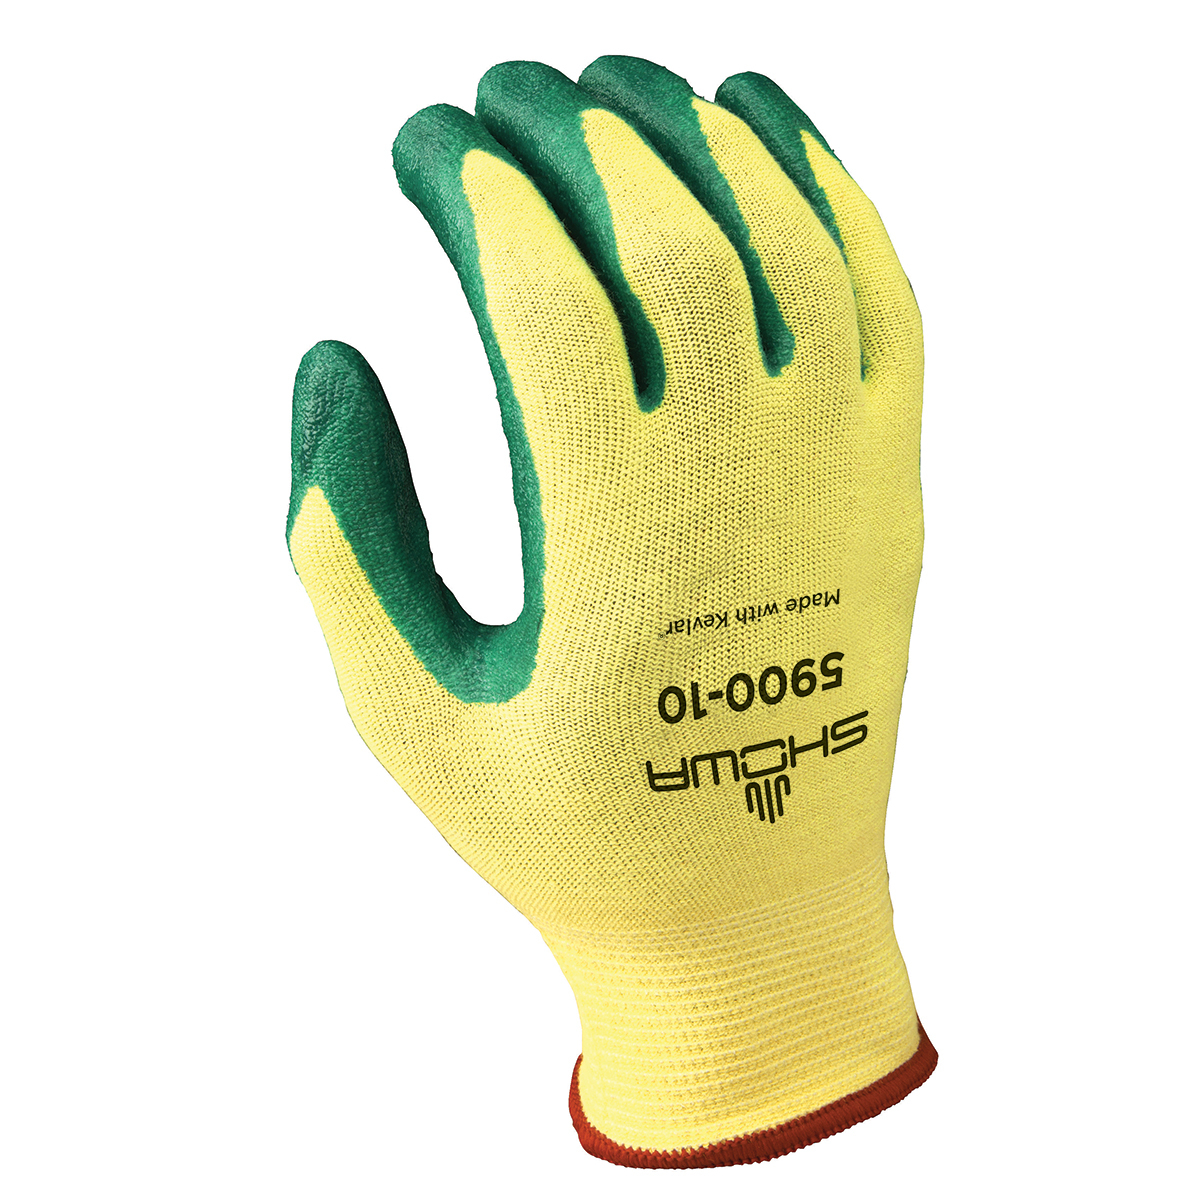 SHOWA® 5900 15 Gauge DuPont™ Kevlar® And LYCRA® Cut Resistant Gloves With Nitrile Coating